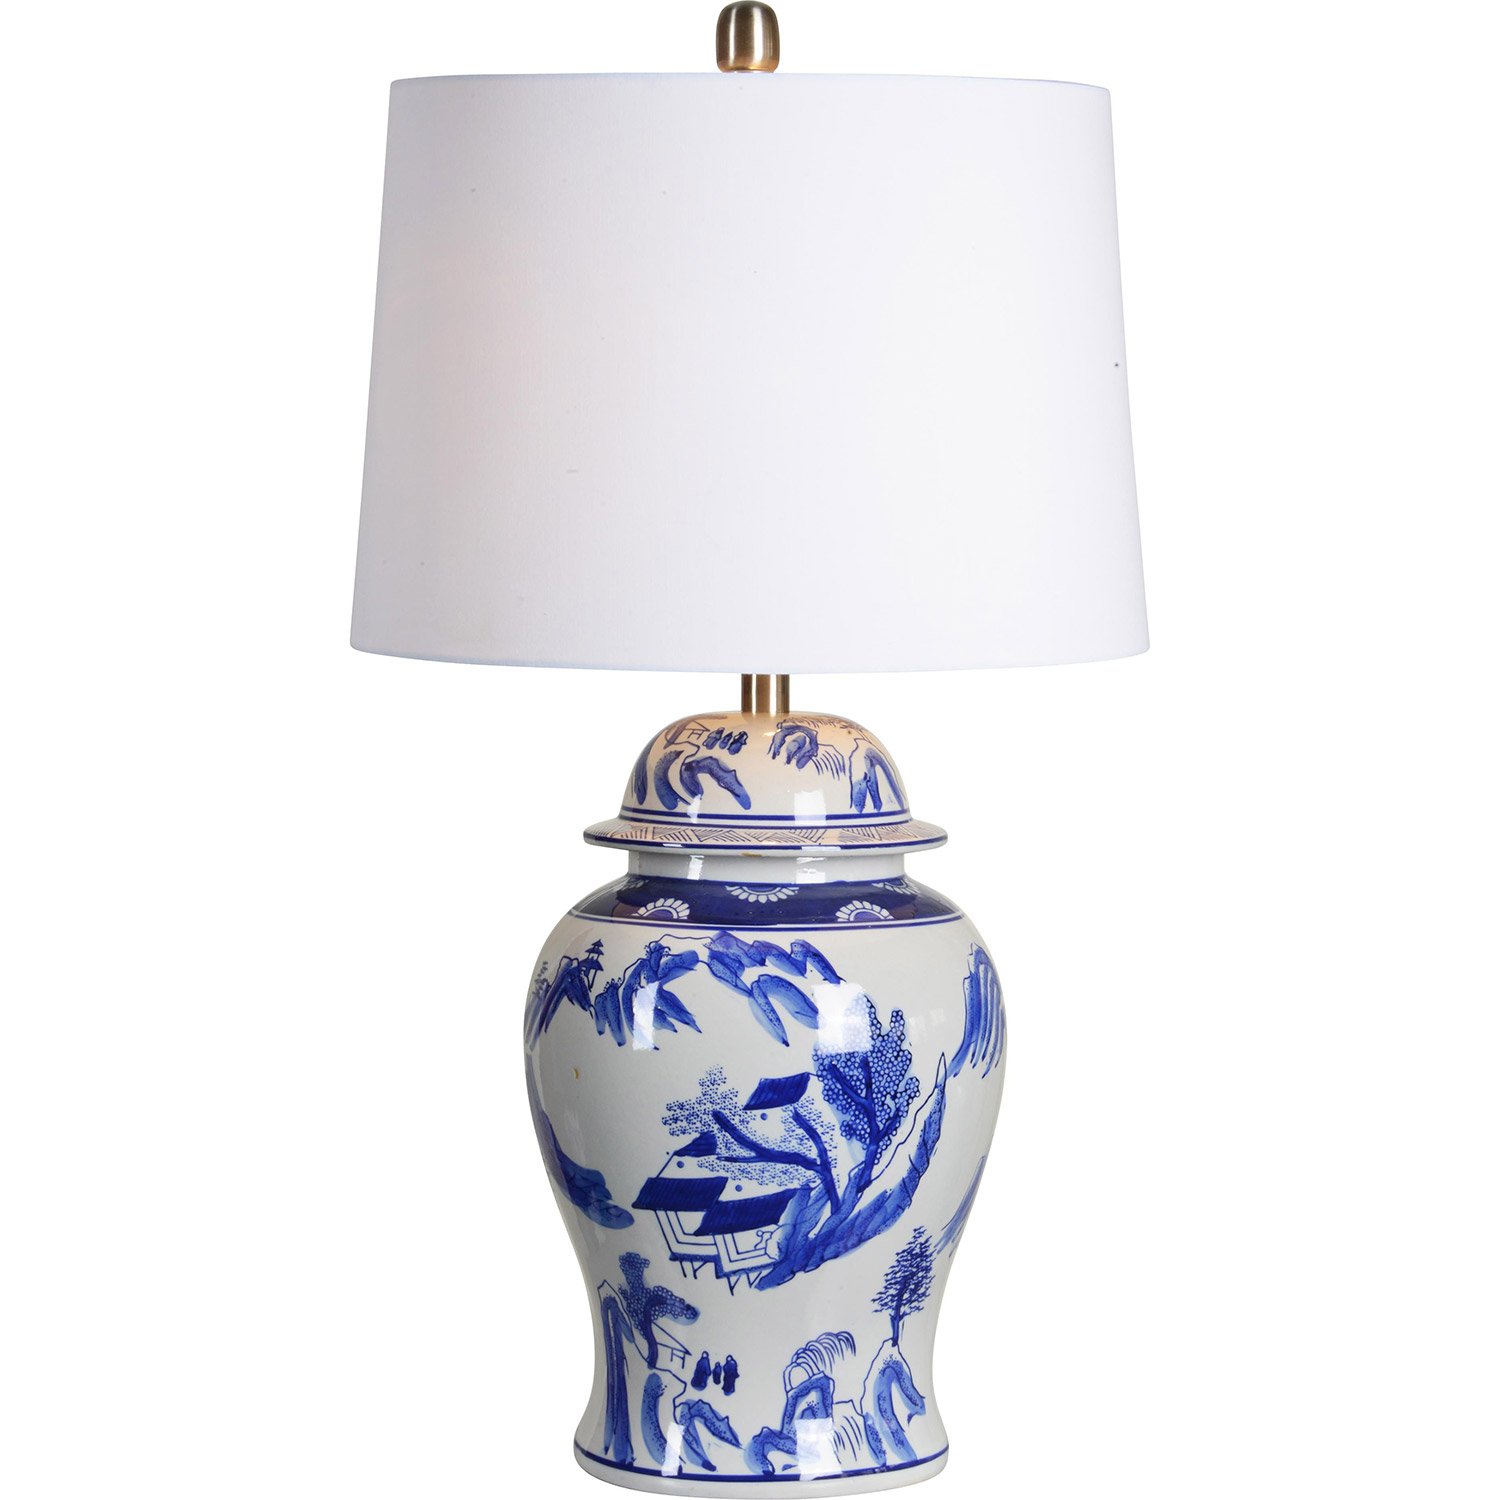 Ren-Wil Alma Table Lamp - Blue/White